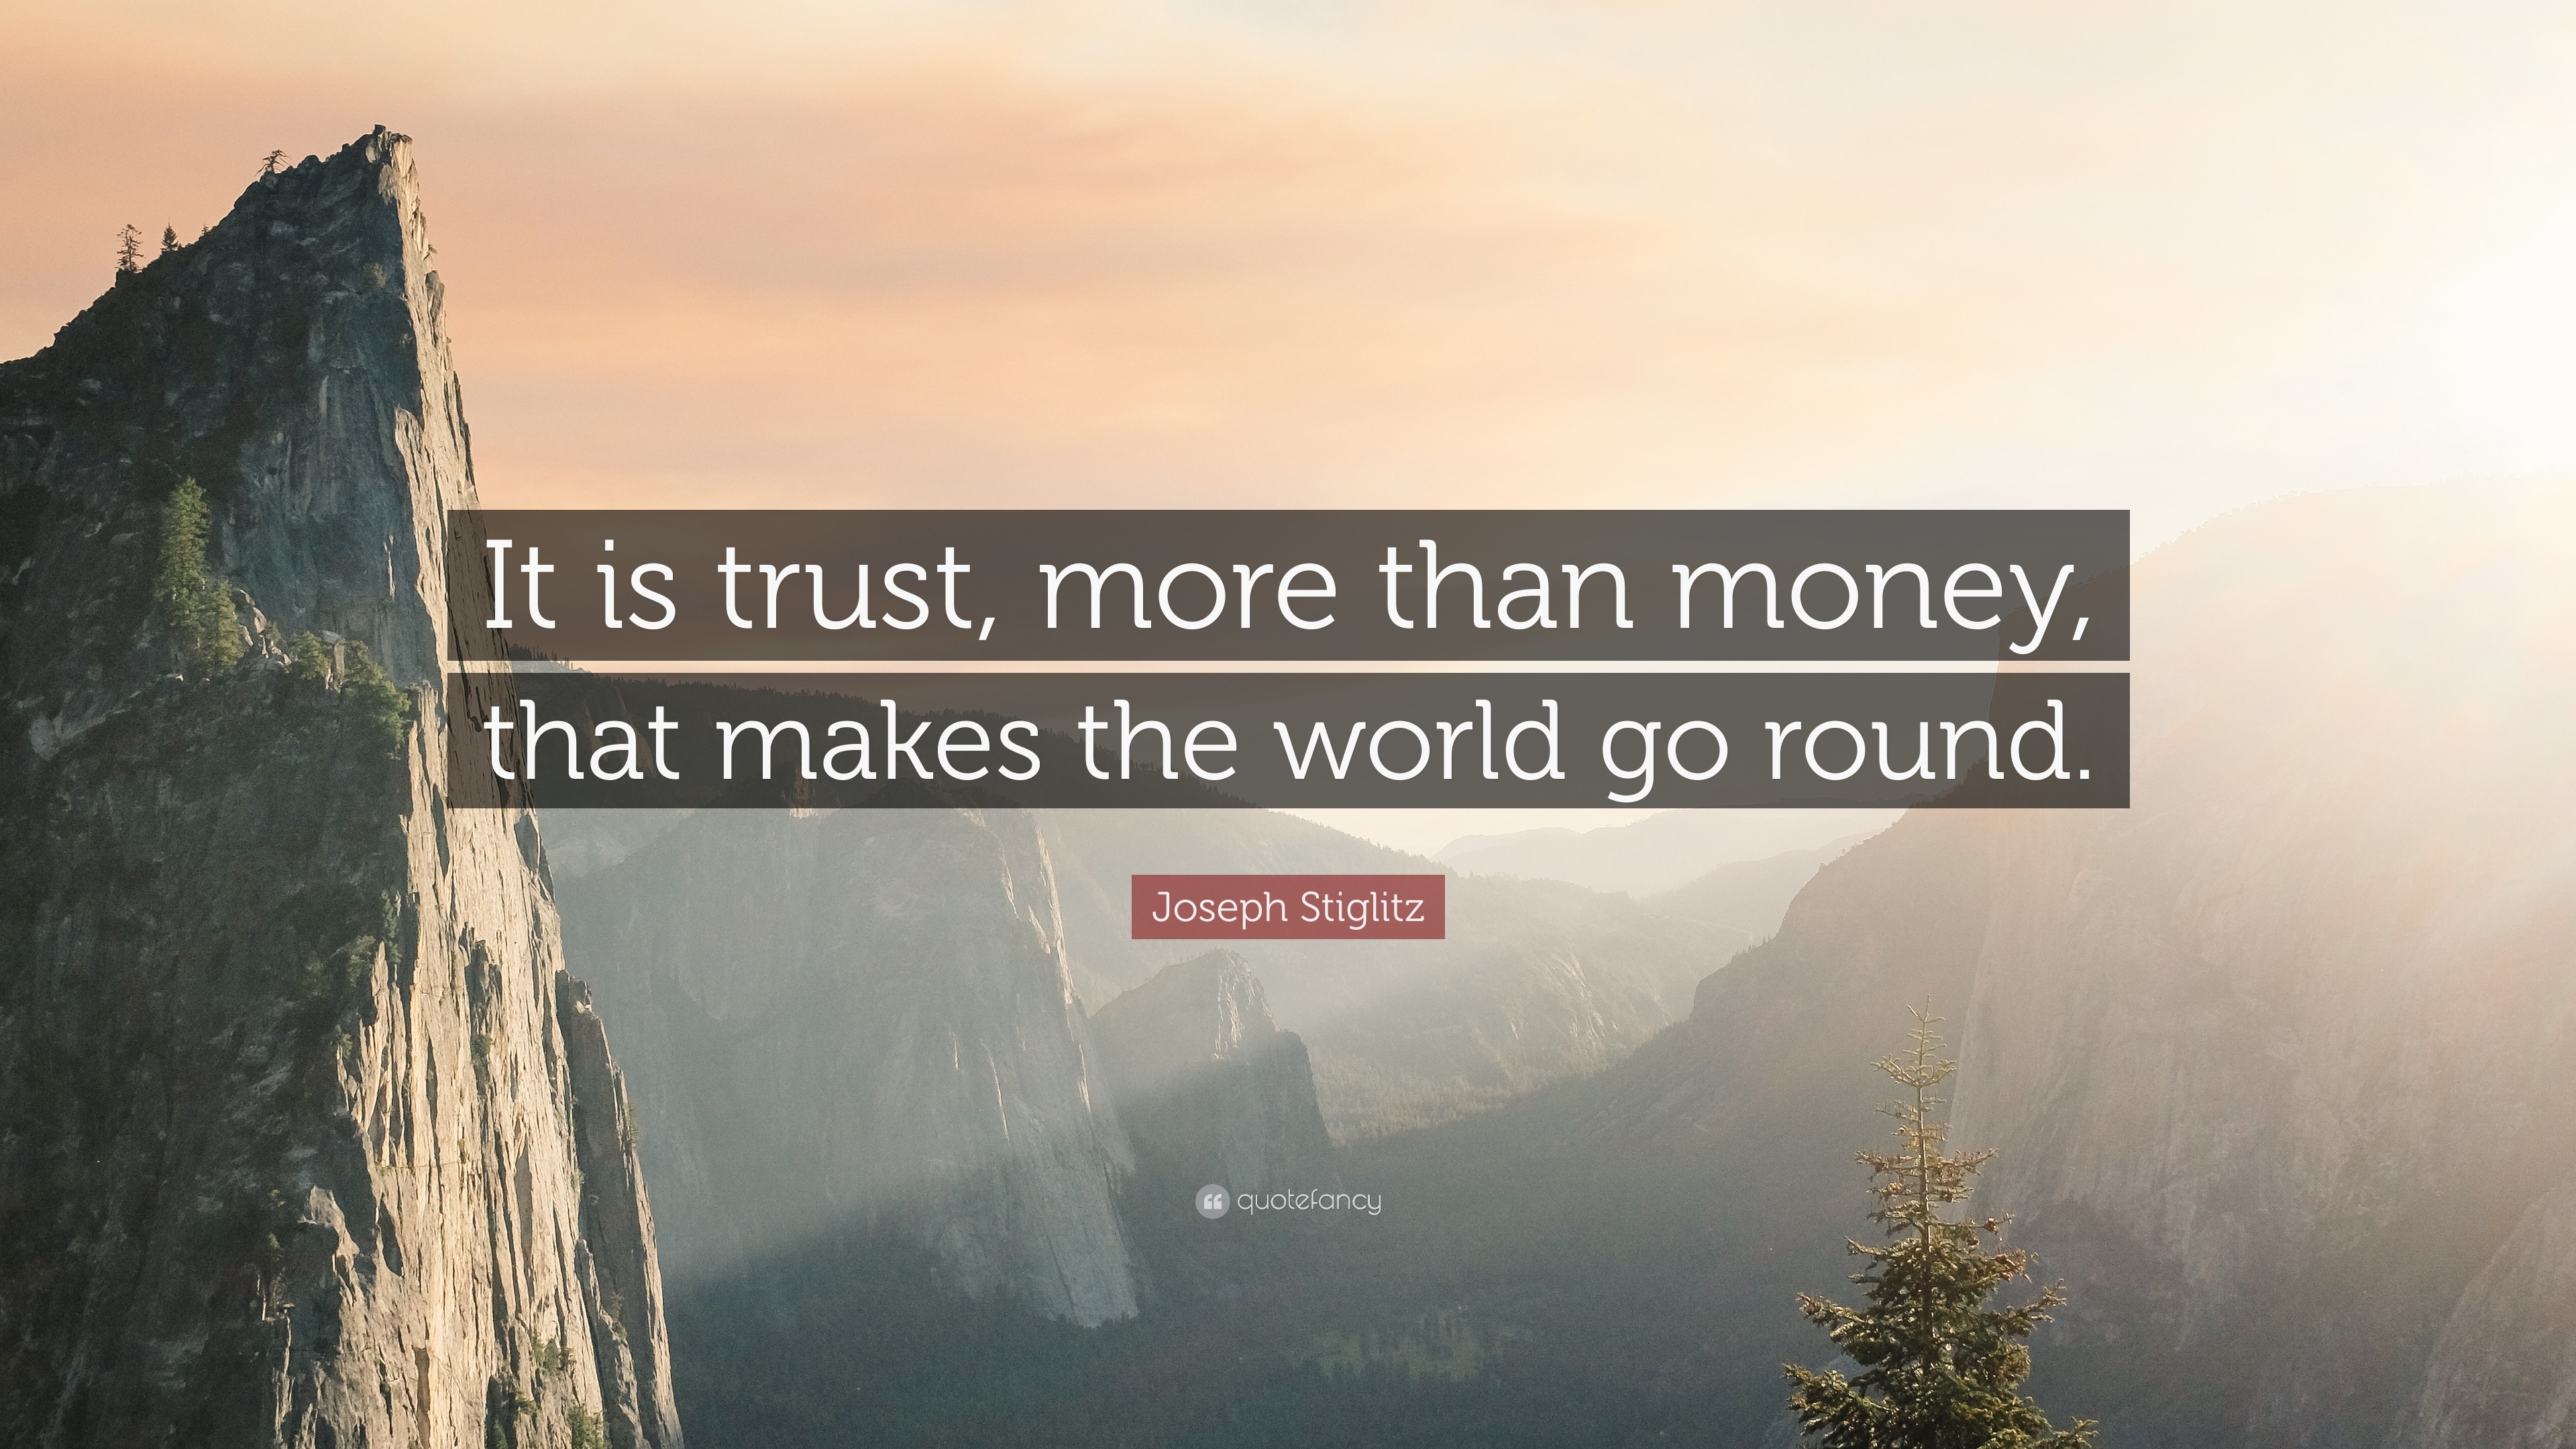 Joseph Stiglitz Quote: "It is trust, more than money, that makes the world go round." (7 ...